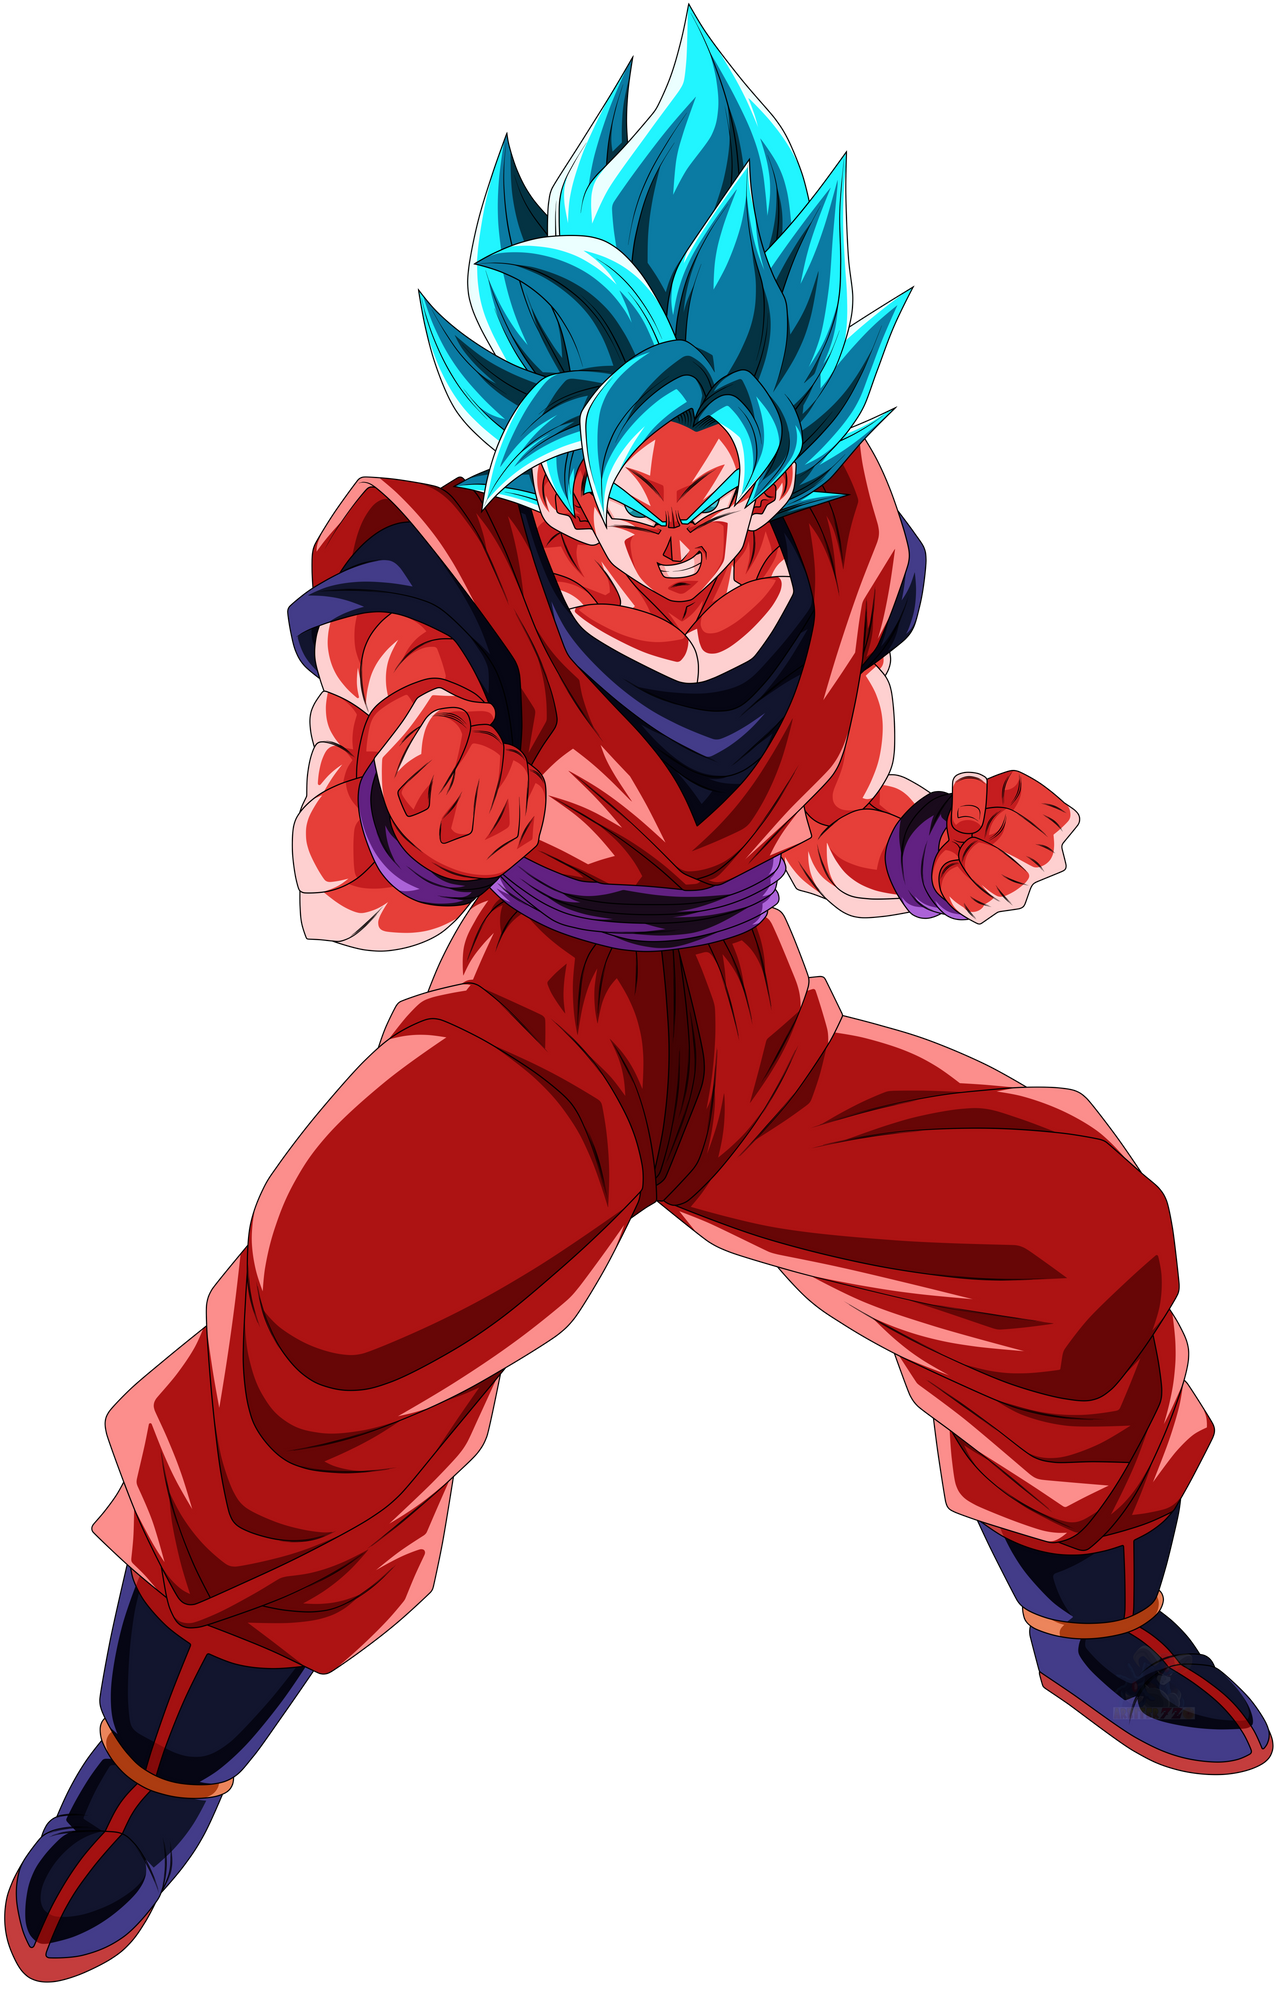 Son Goku Super Saiyan Blue (Kaioken Animation) by M3ruem on DeviantArt